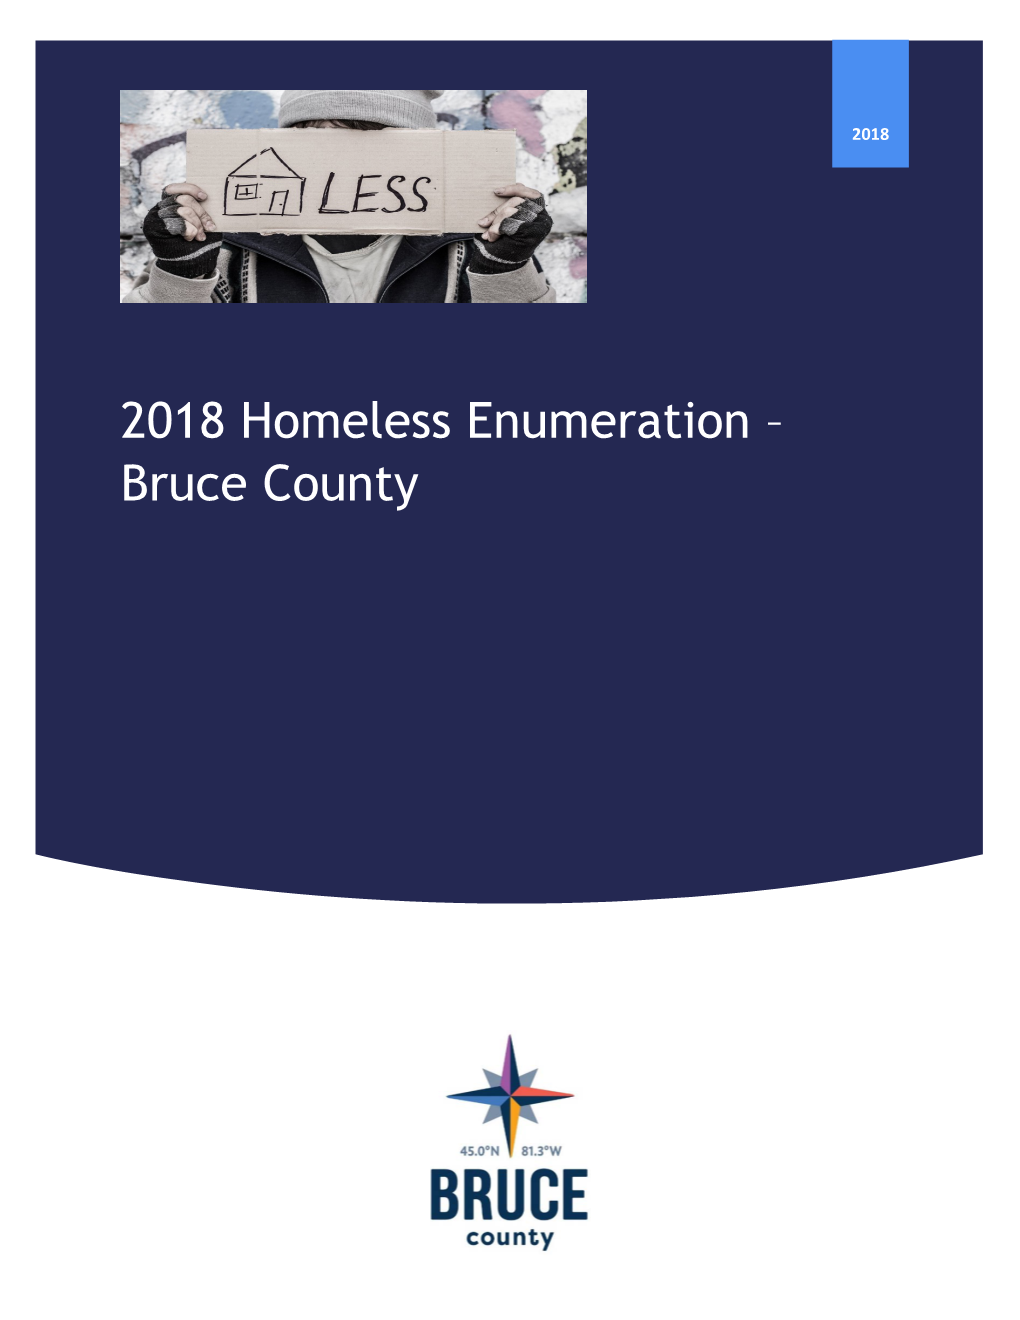 Bruce County 2018 Homeless Enurmeration